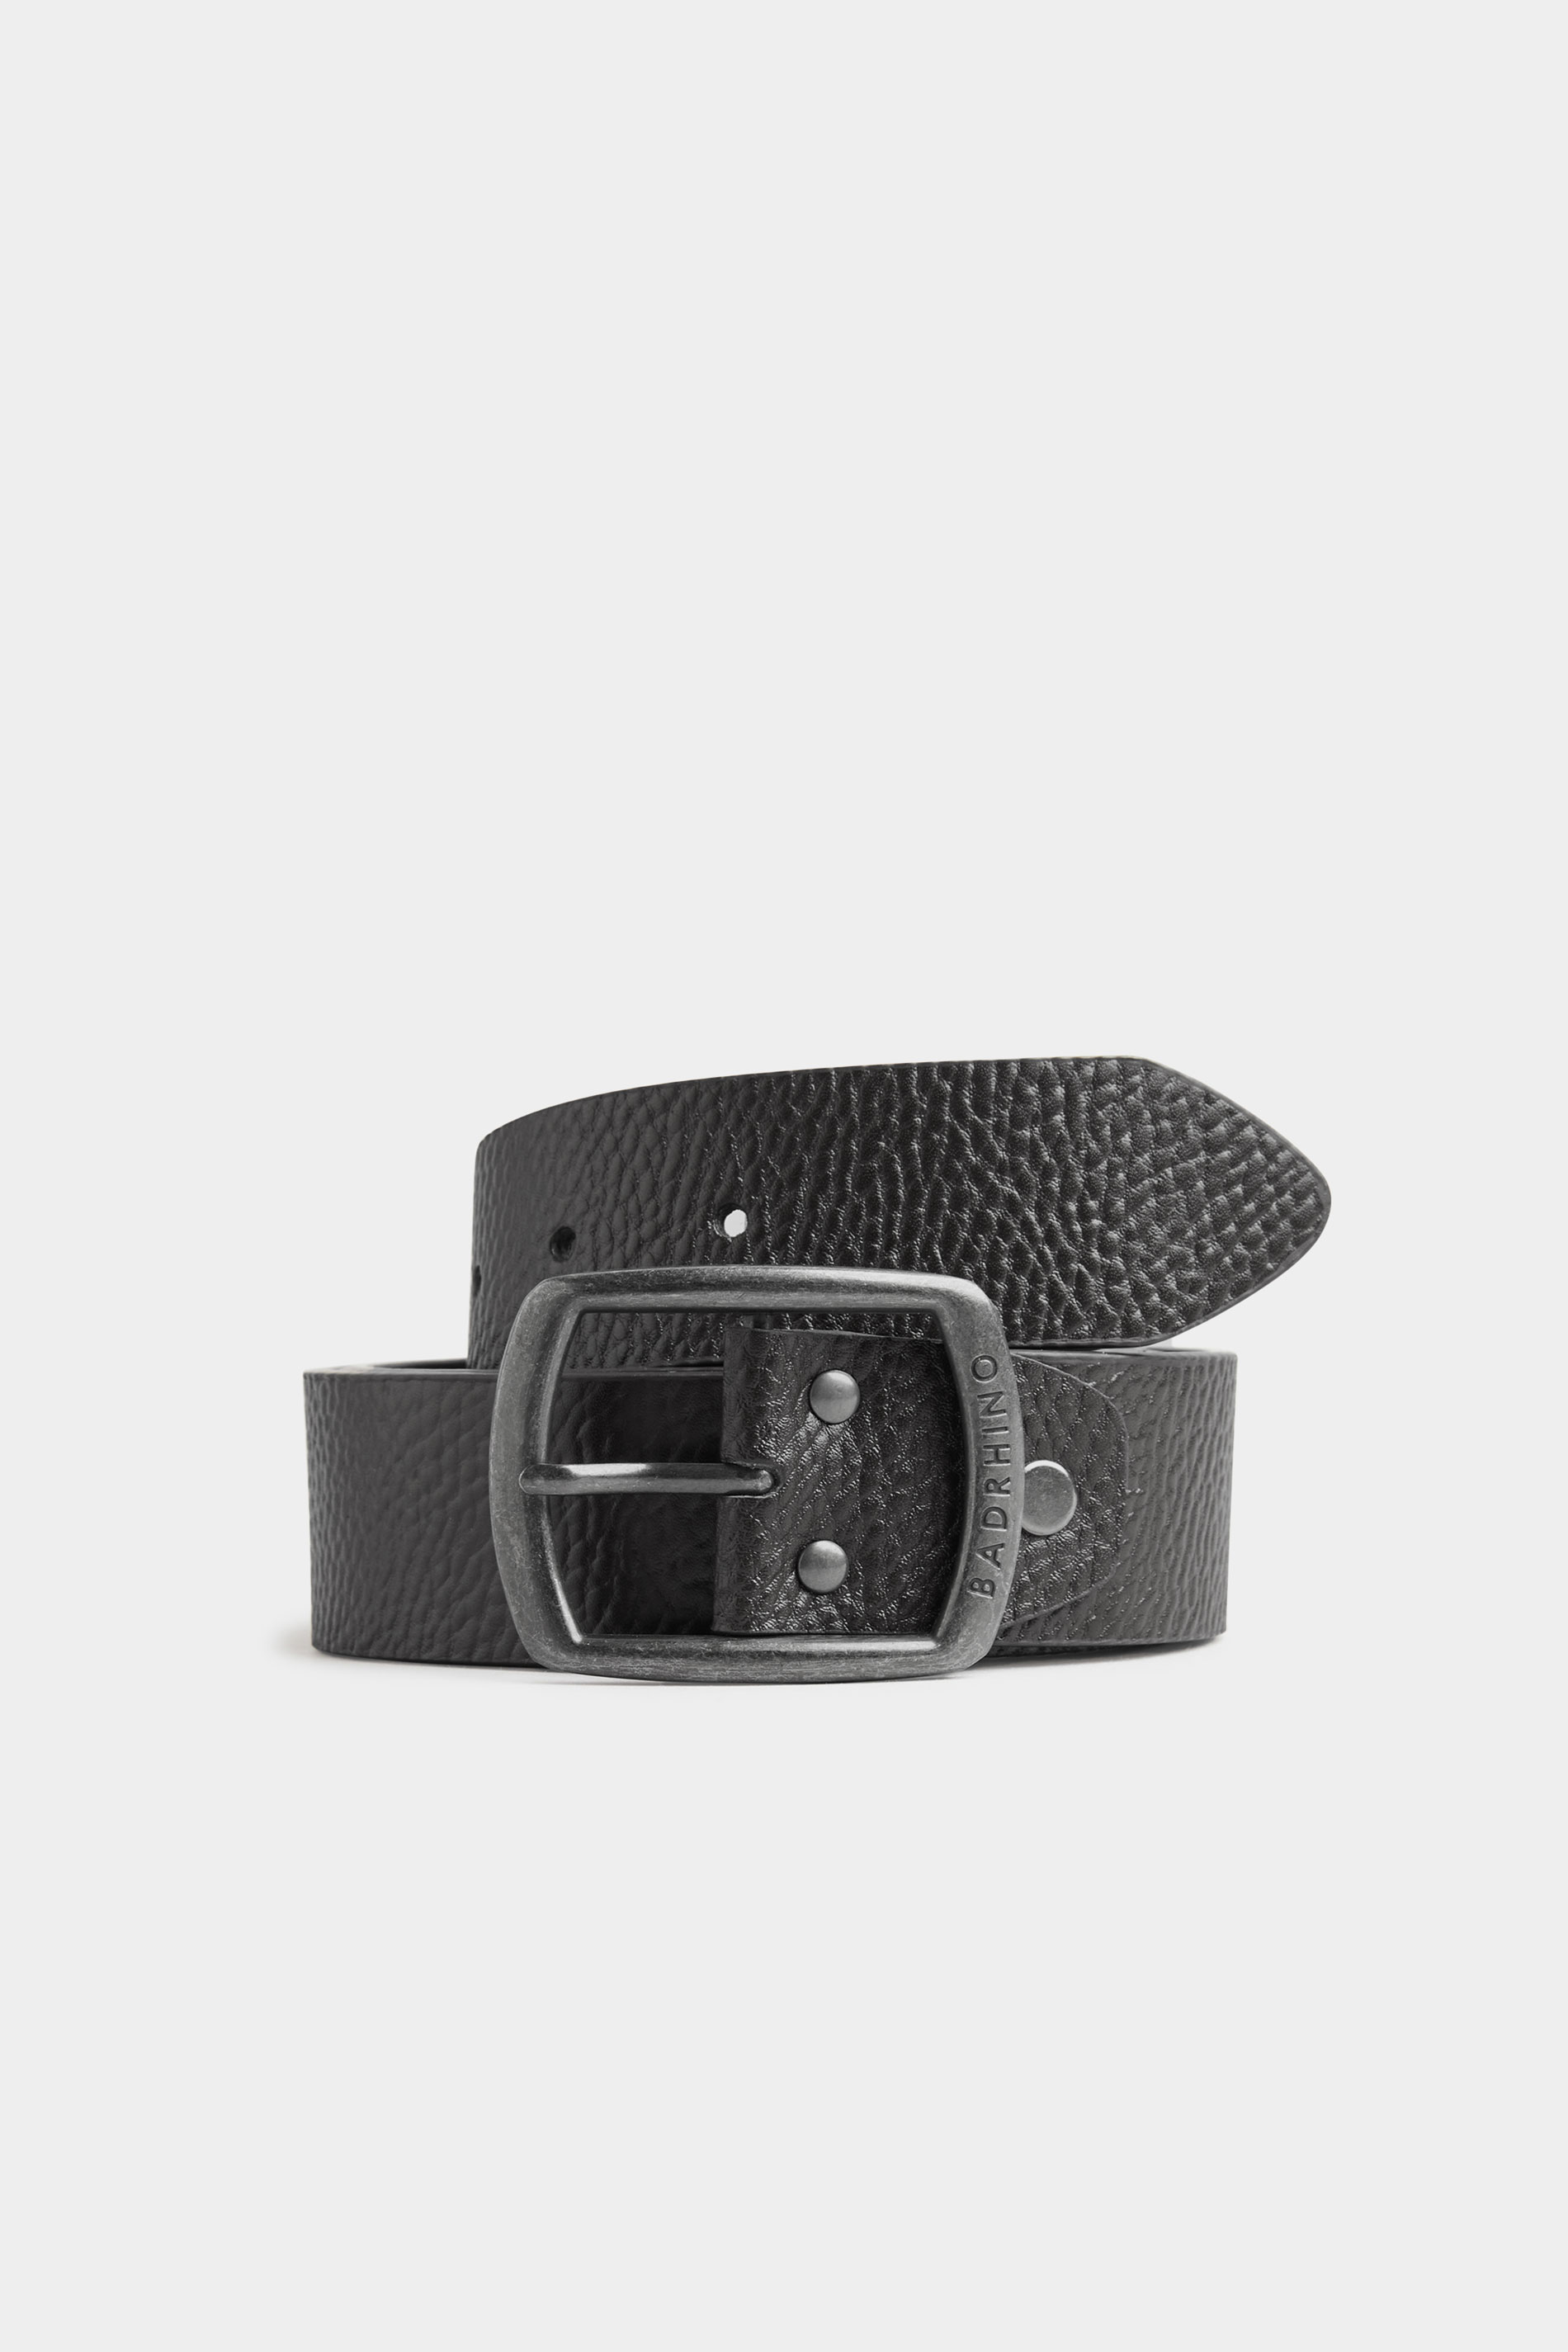 BadRhino Black Leather Belt | BadRhino 2